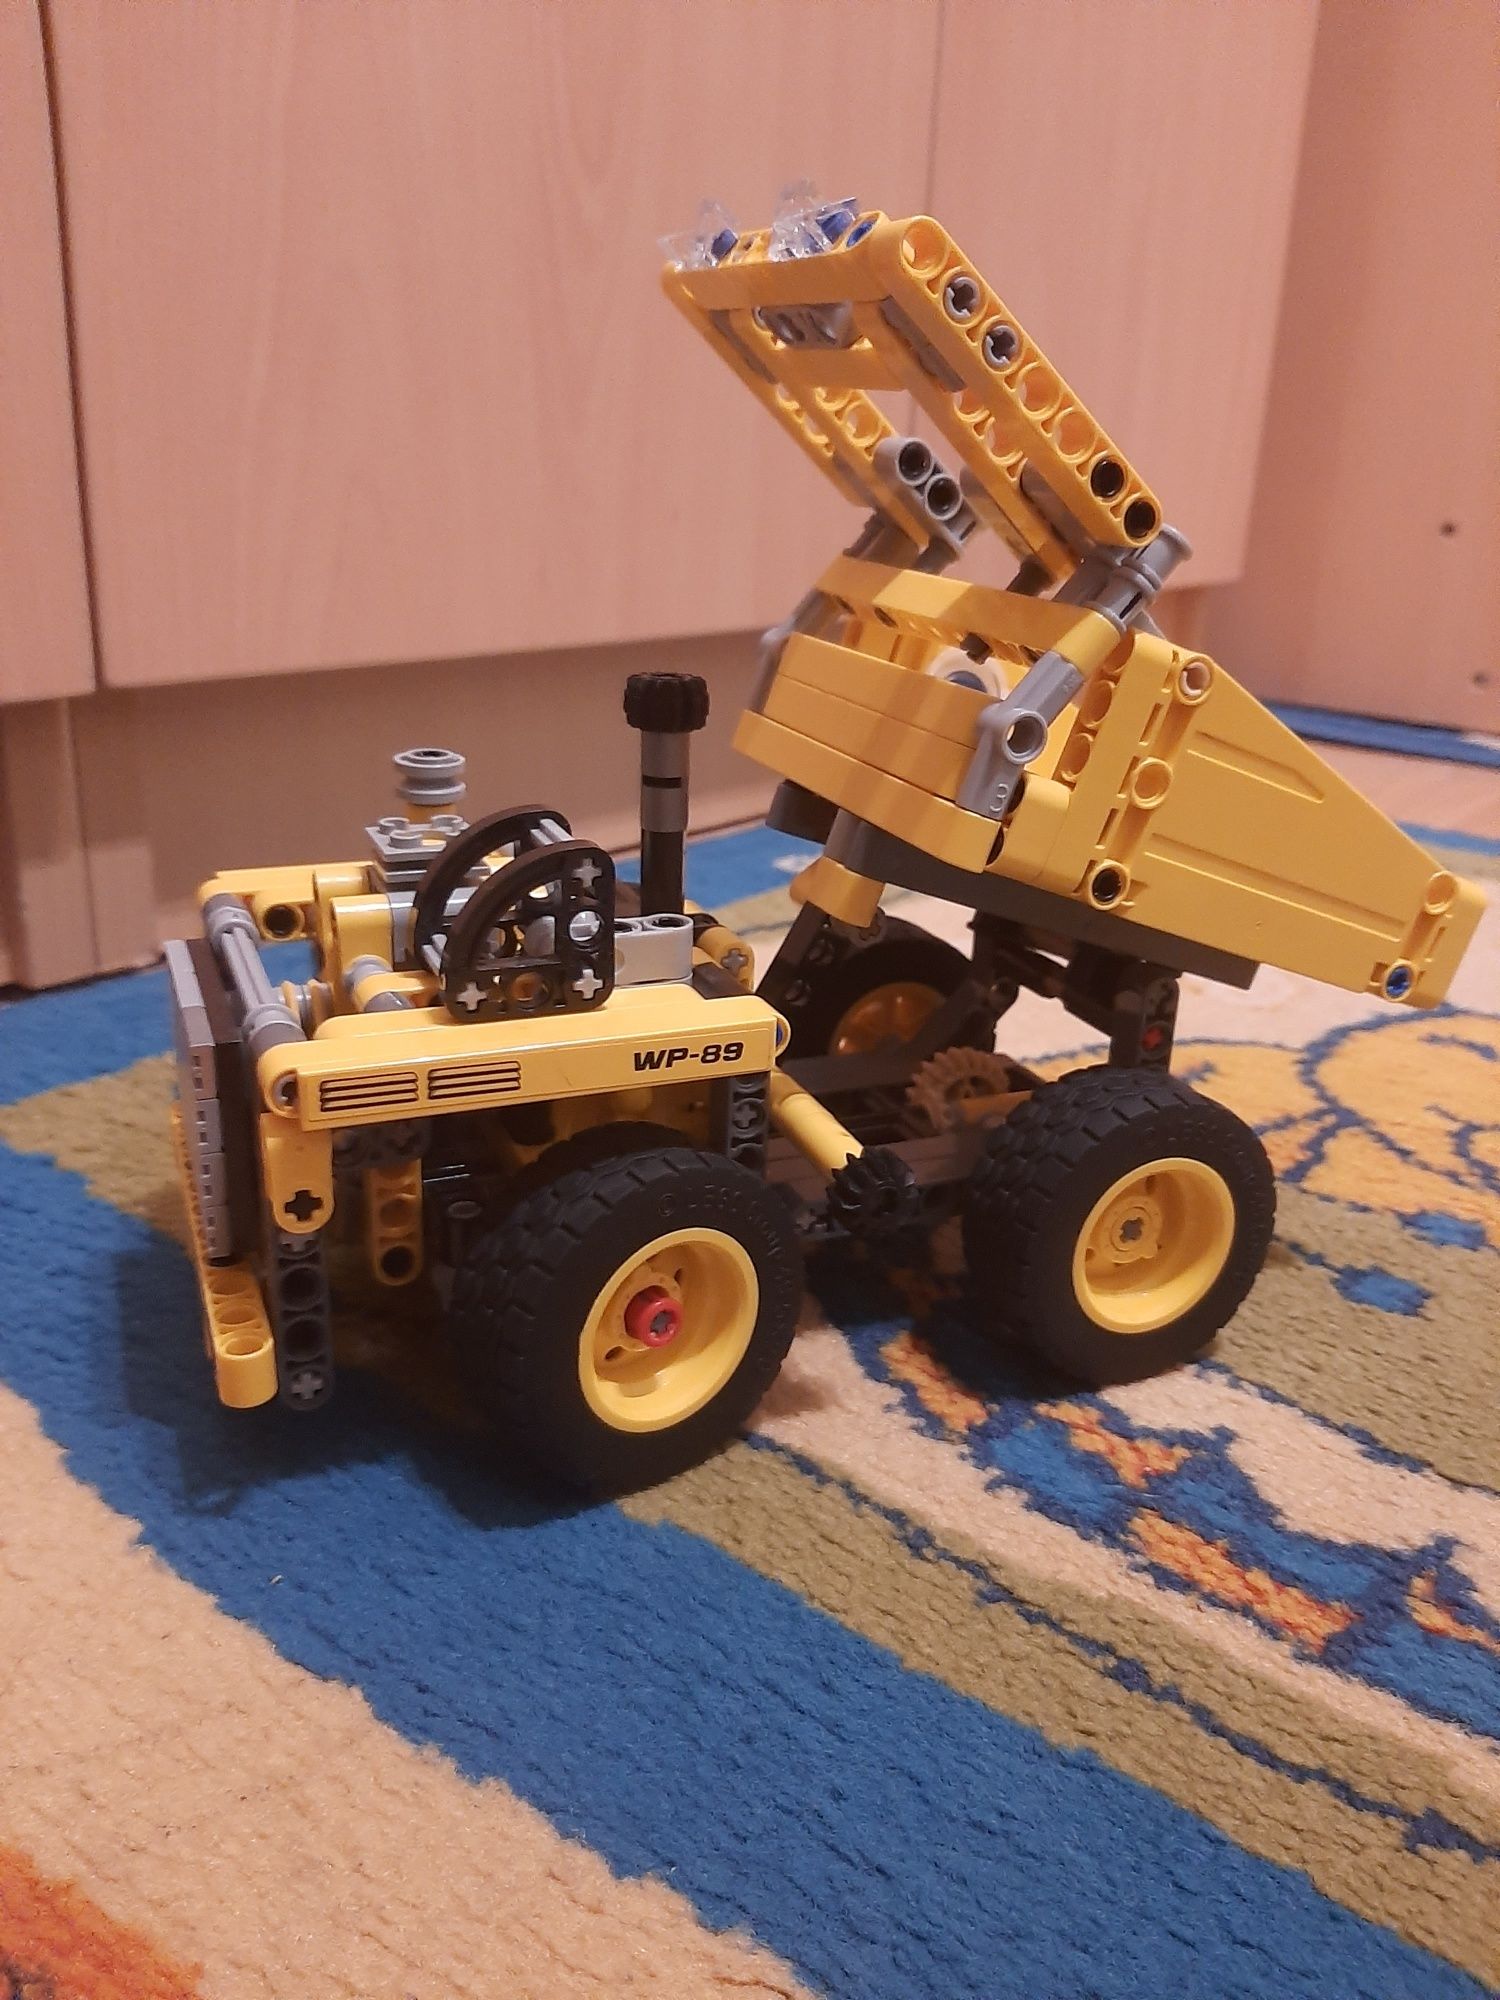 Lego technic 42035